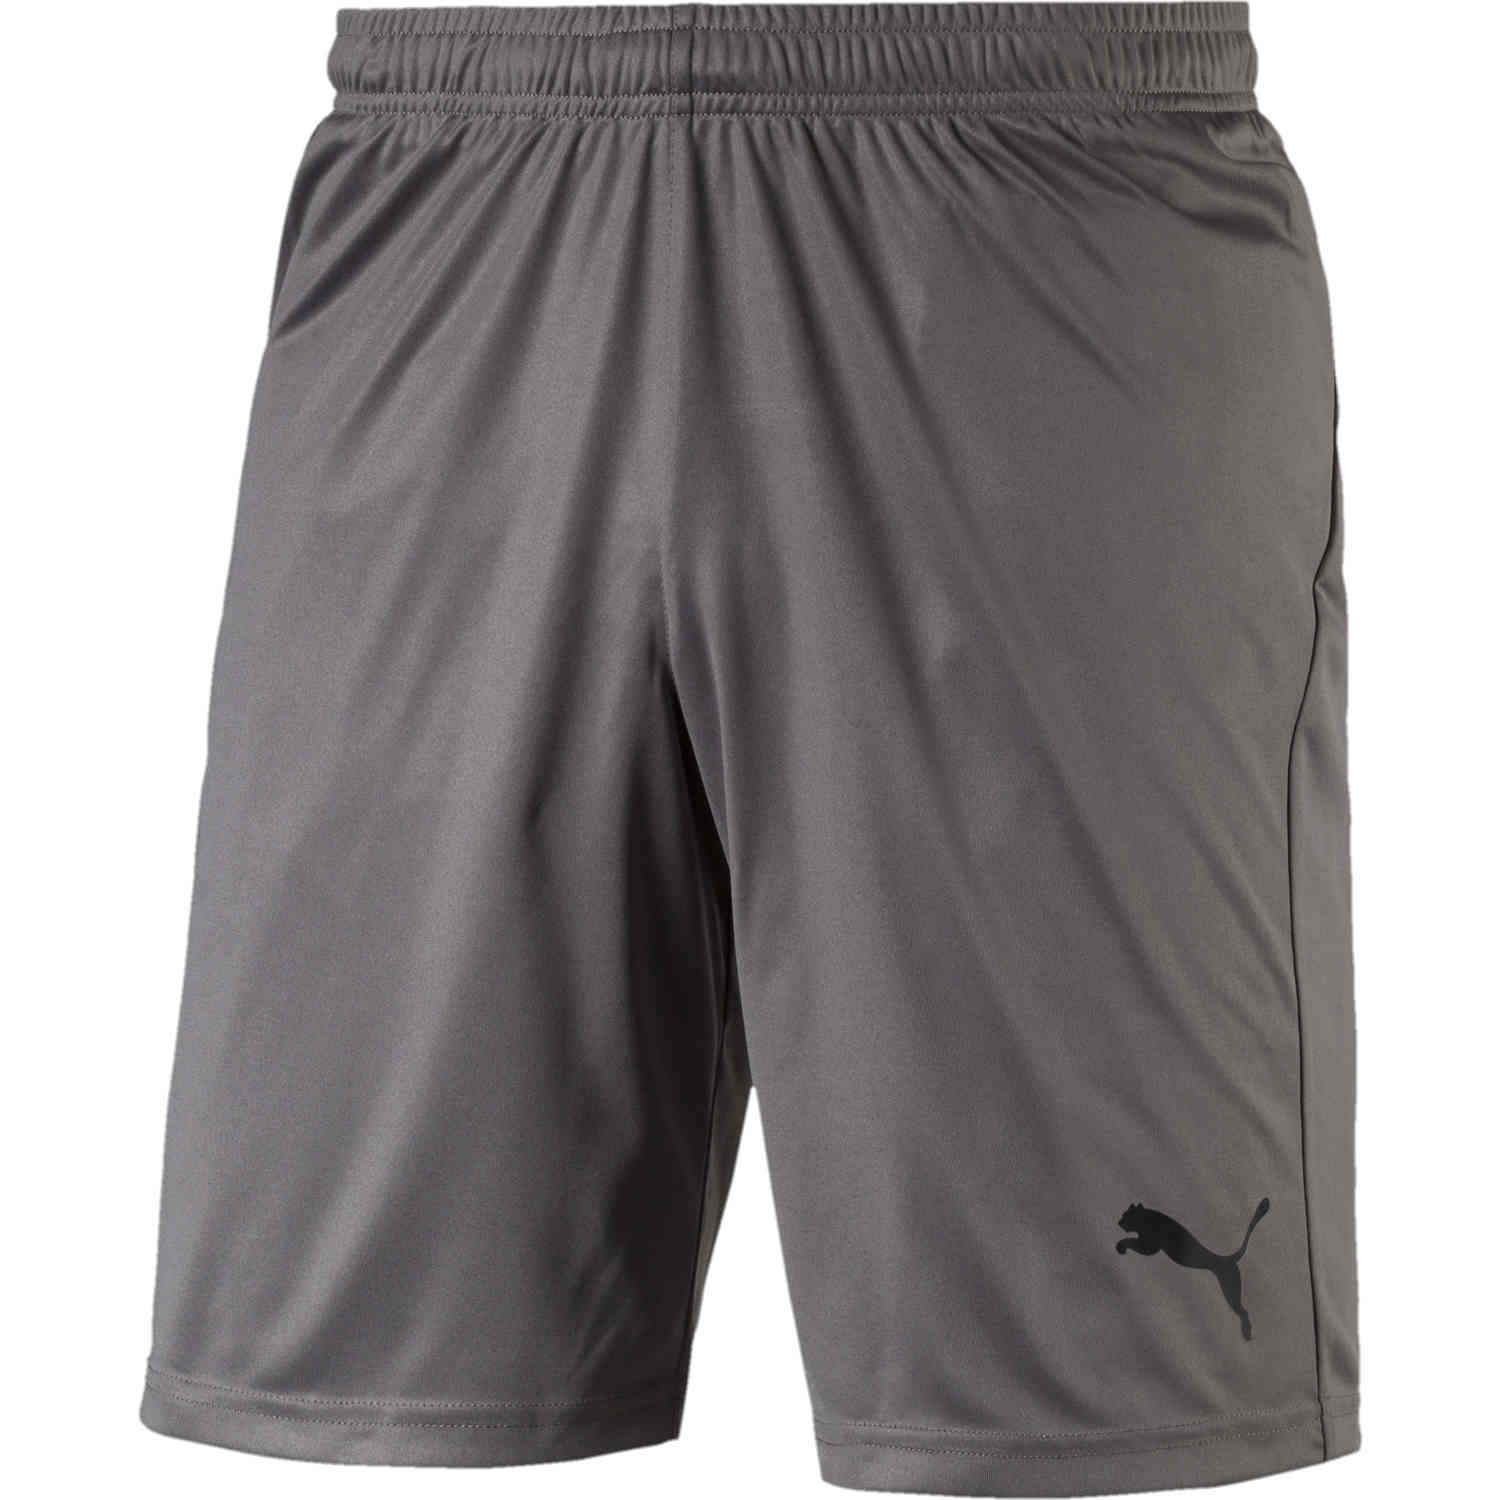 Buy > liga shorts core > in stock